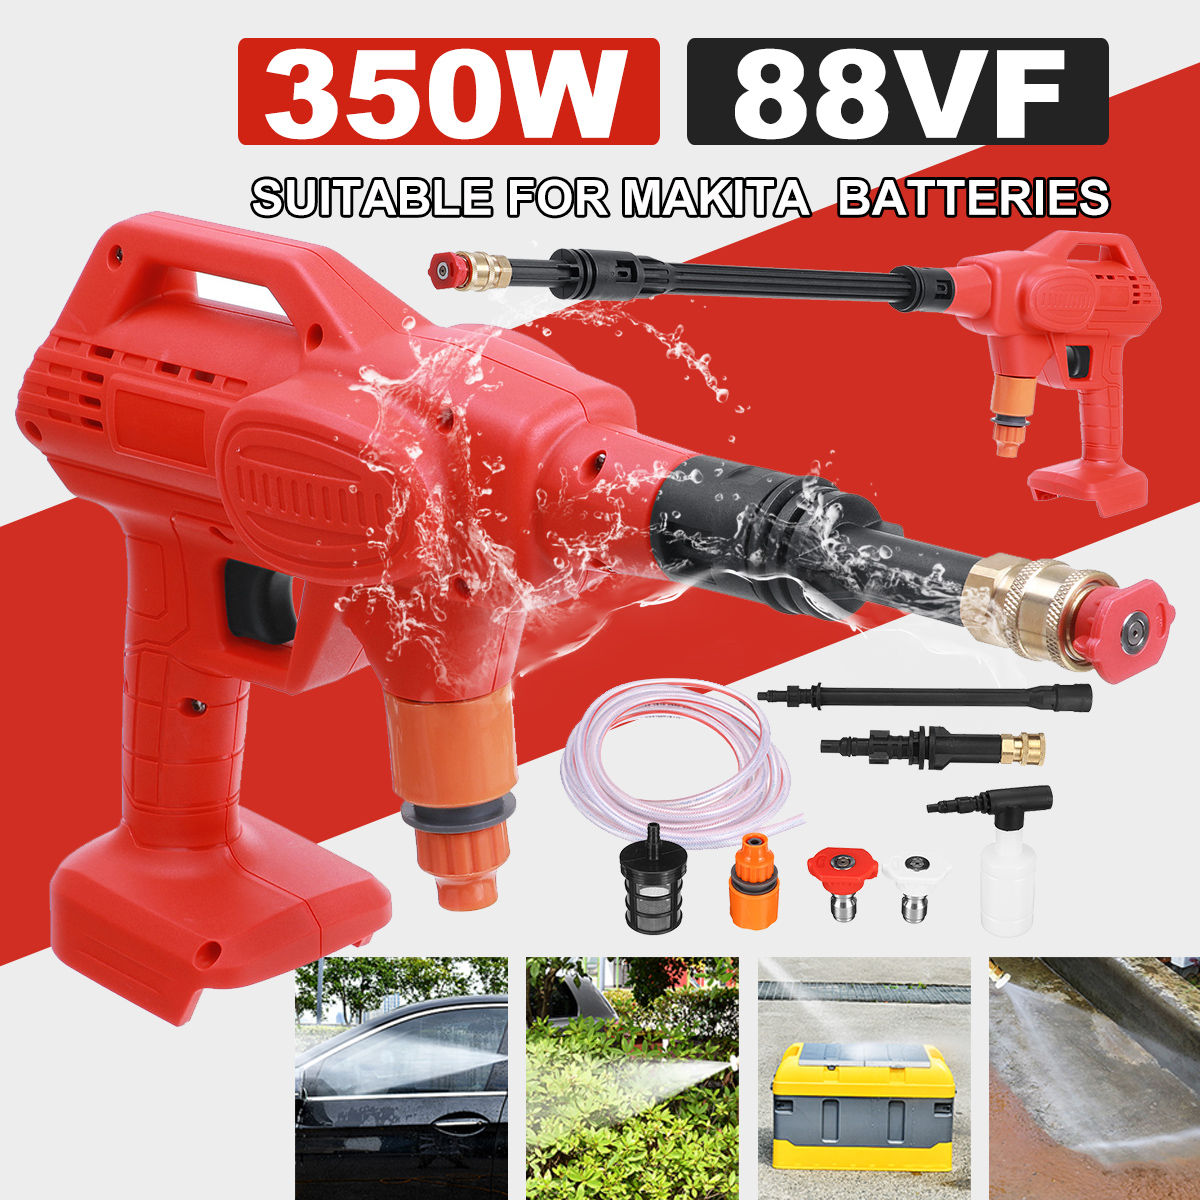 350W-High-Power-Washing-Machine-Car-Washer-High-pressure-Water-Pump-For-Makita-Battery-1850551-4